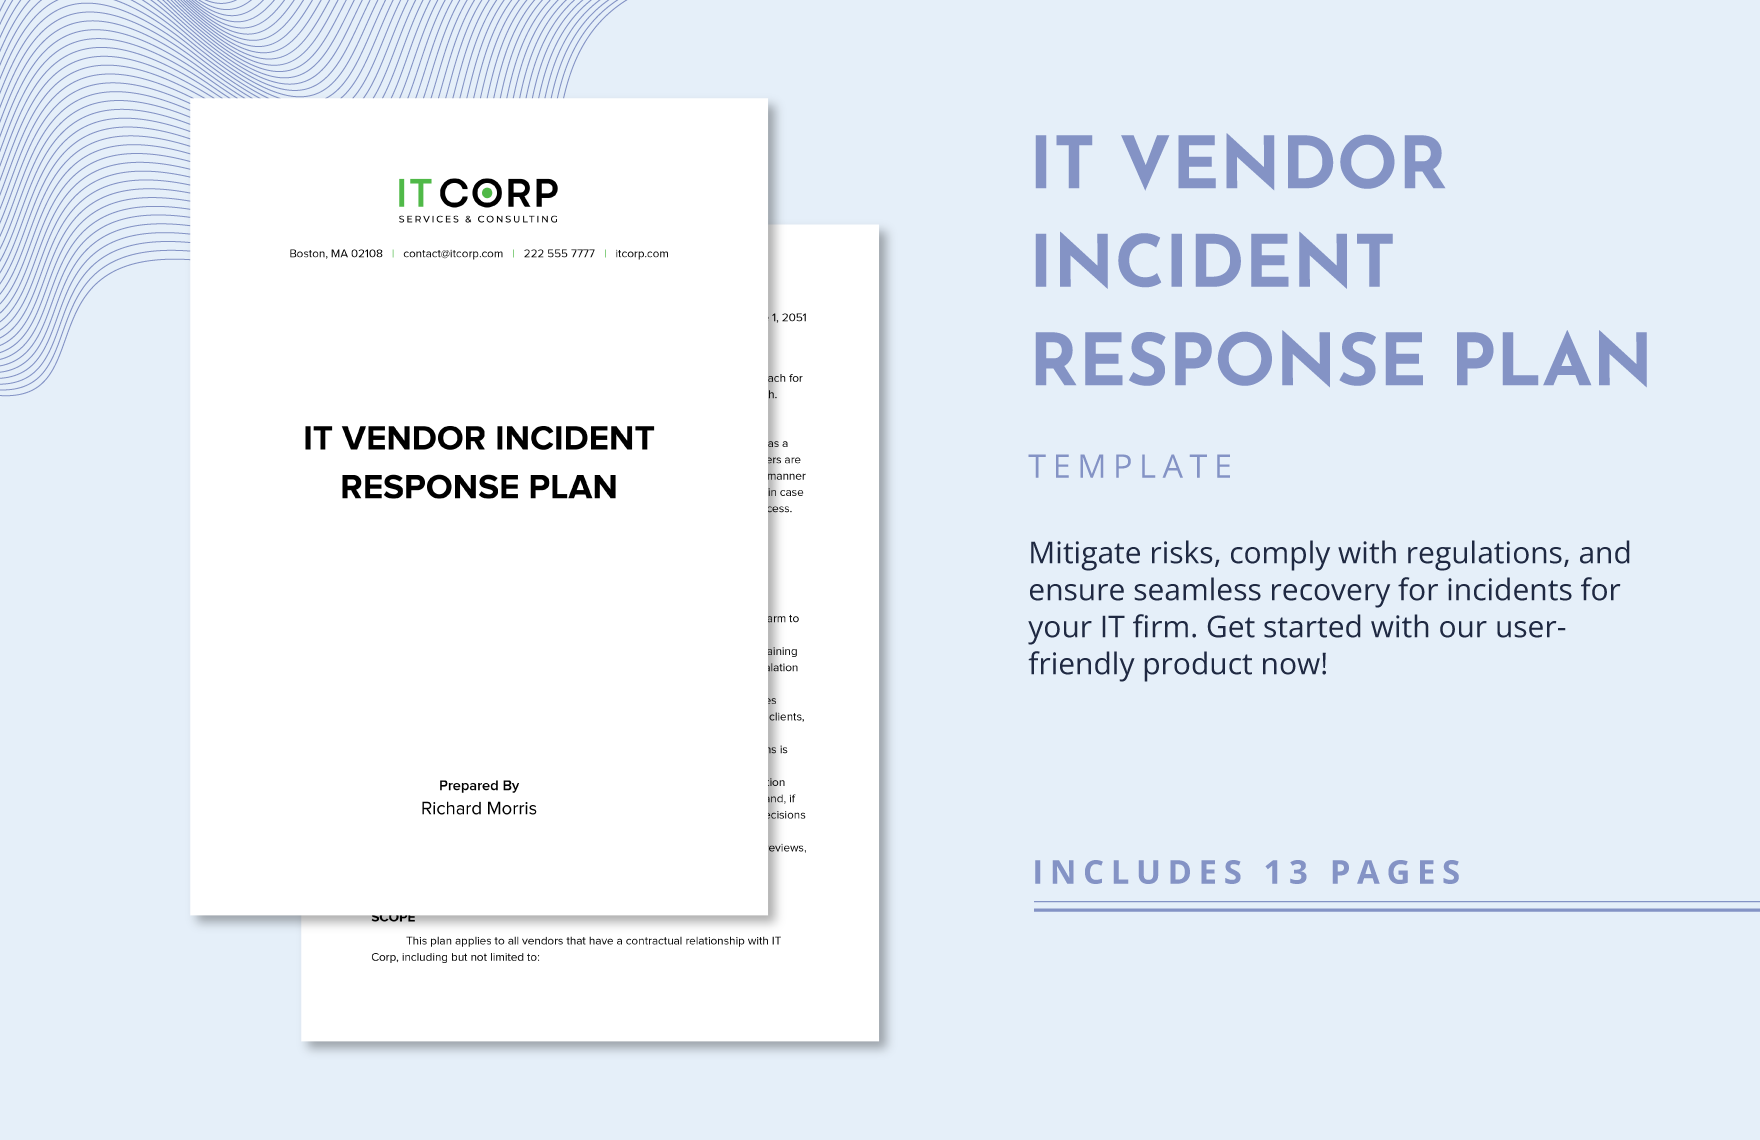 IT Vendor Incident Response Plan Template